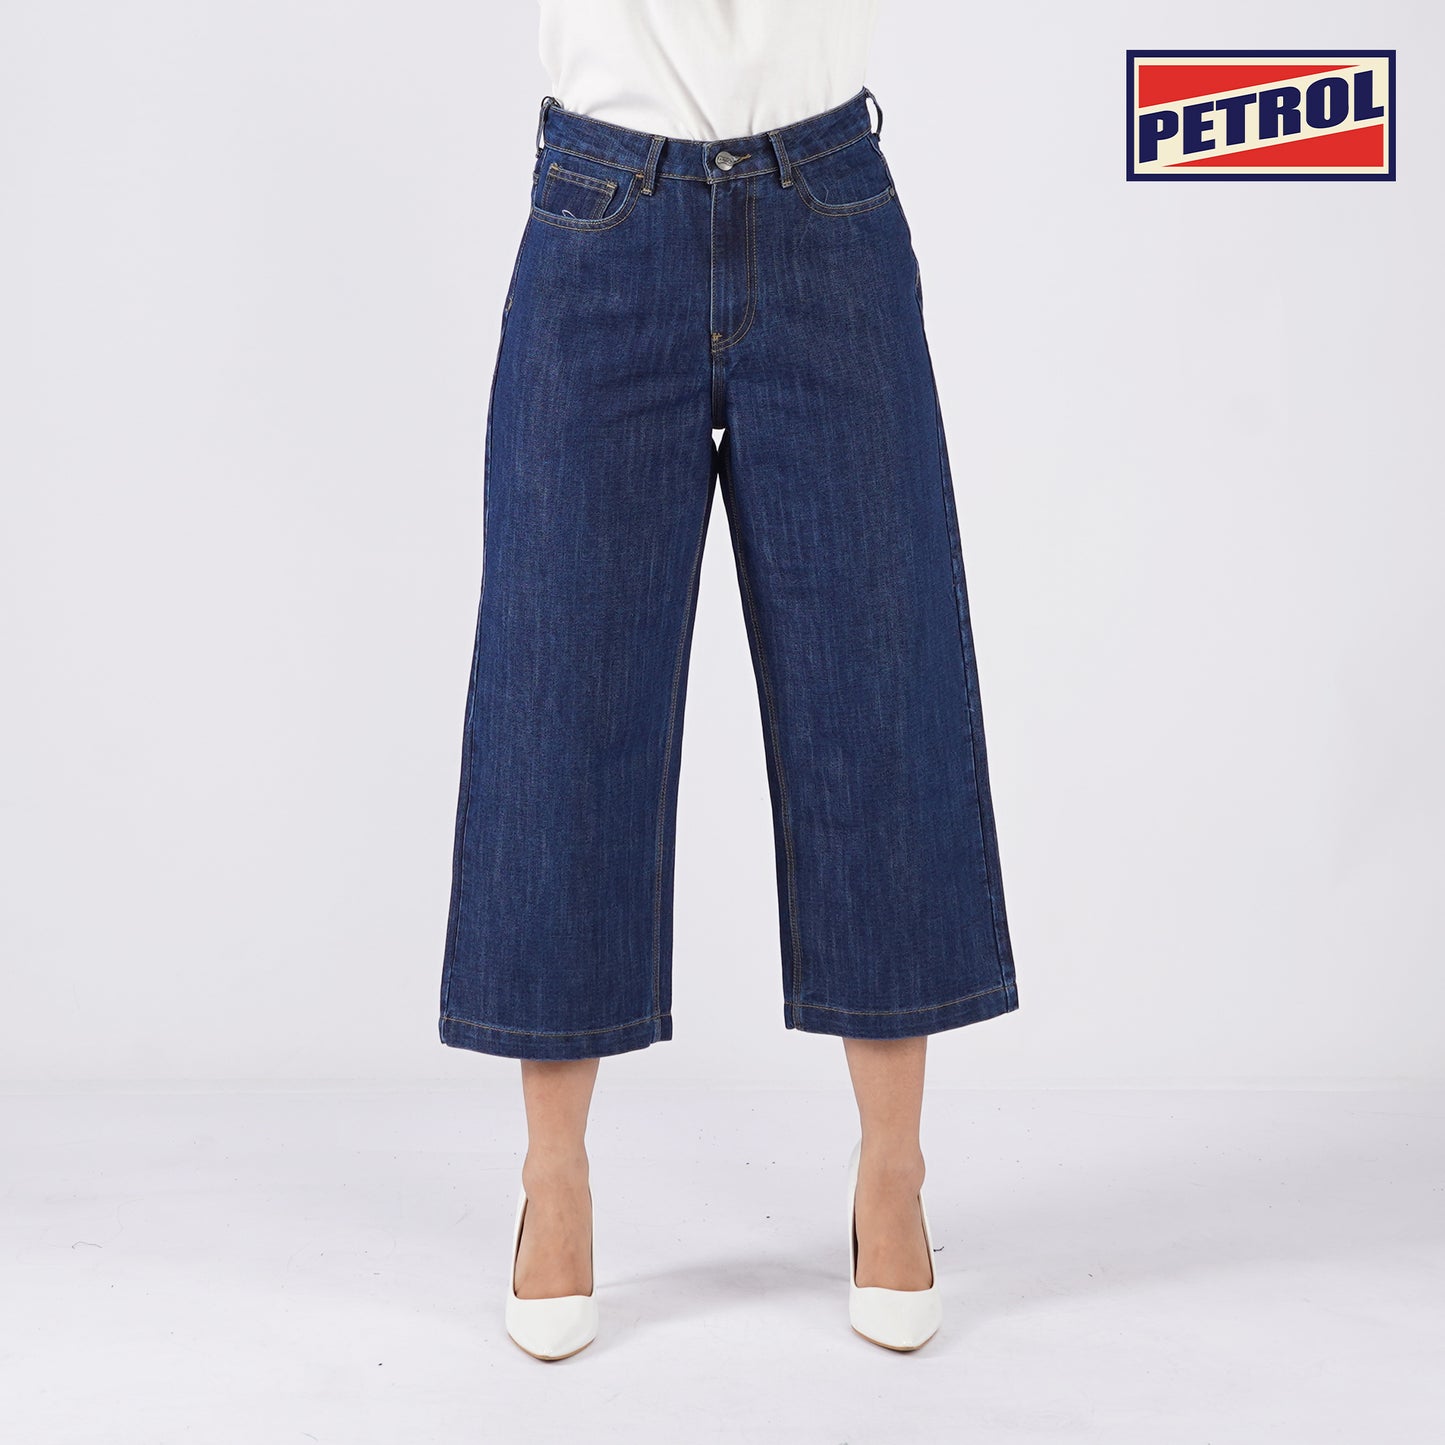 Petrol Ladies Basic Denim Culottes Pants Trendy Fashion High Quality Apparel Comfortable Casual Pants for Women Mid Waist 150547 (Dark Shade)